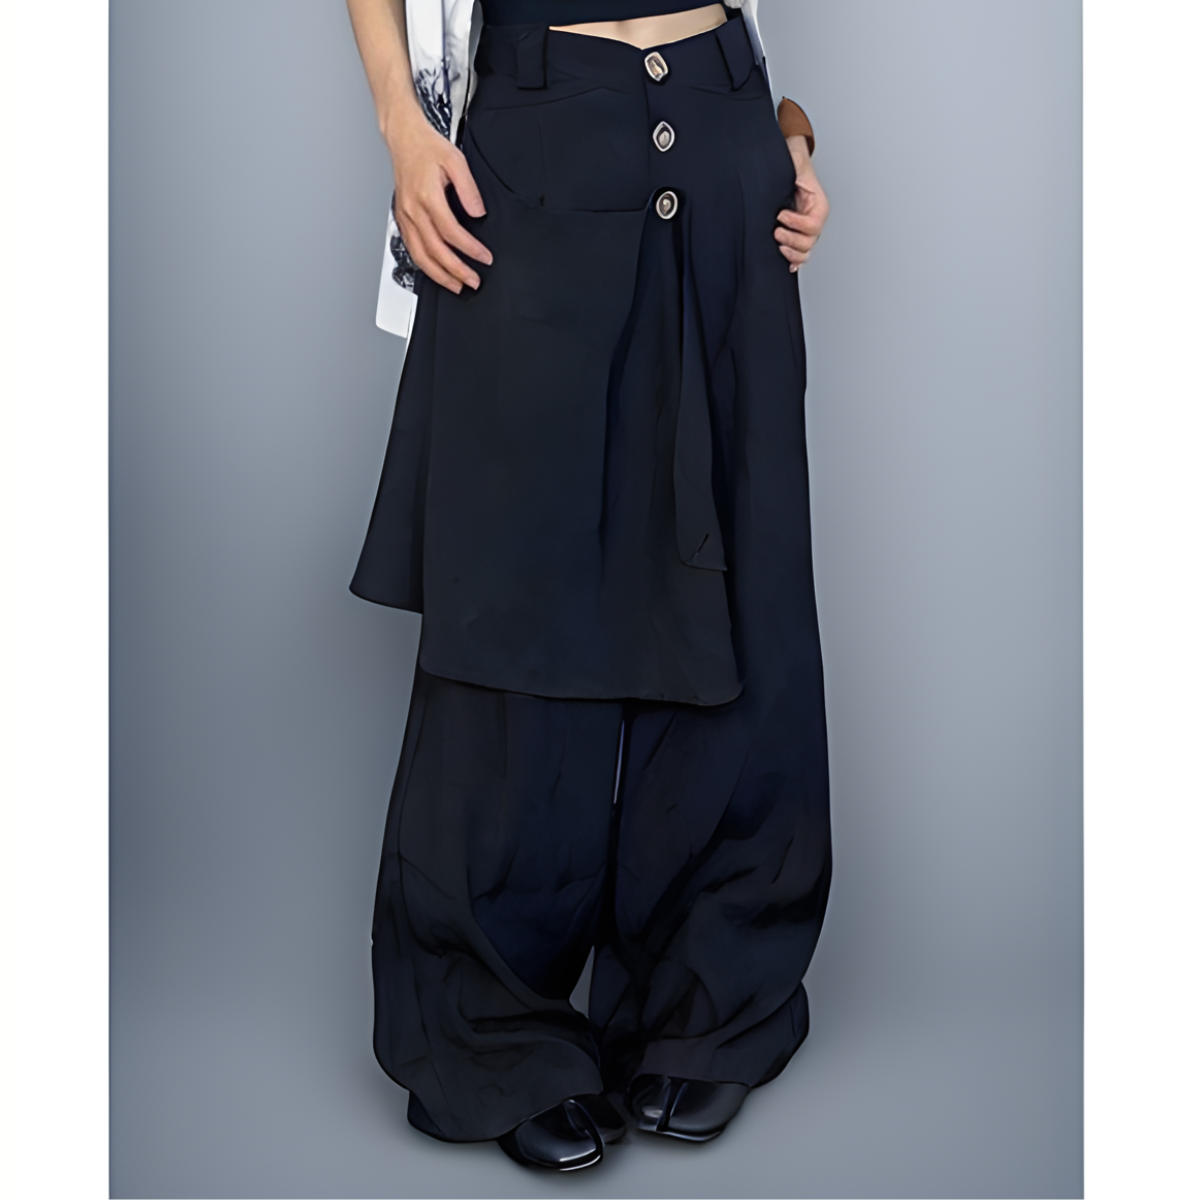 Jazz Up Irregular Design Layered Black Trousers-SimpleModerne